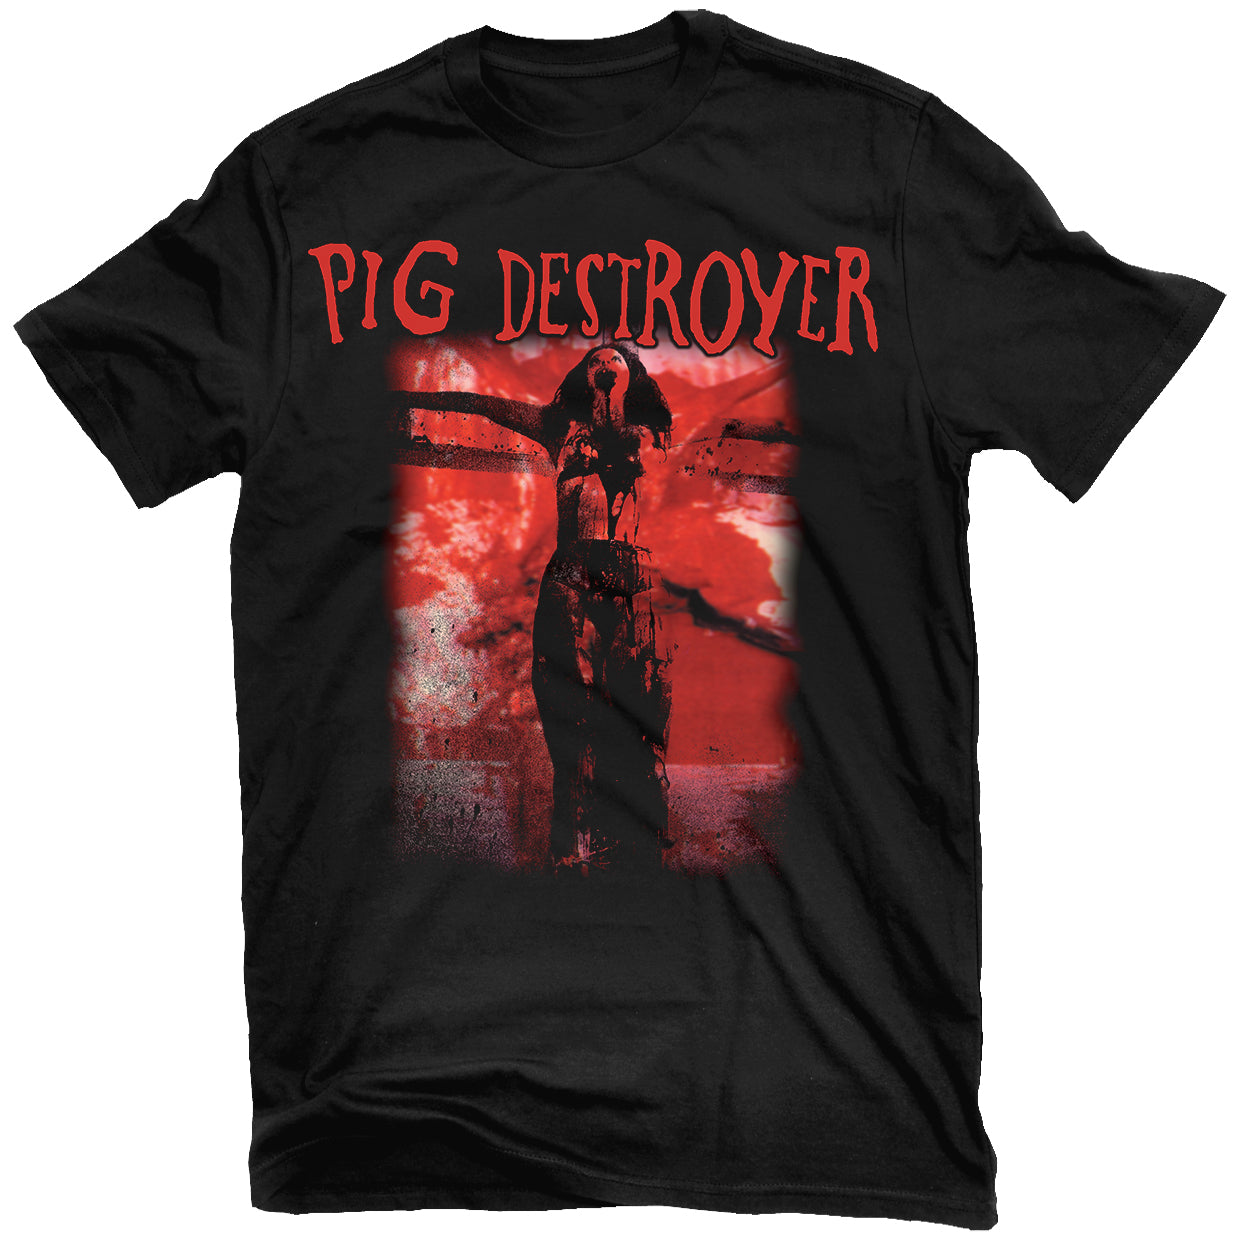 Pig Destroyer "Stab Me Again" T-Shirt